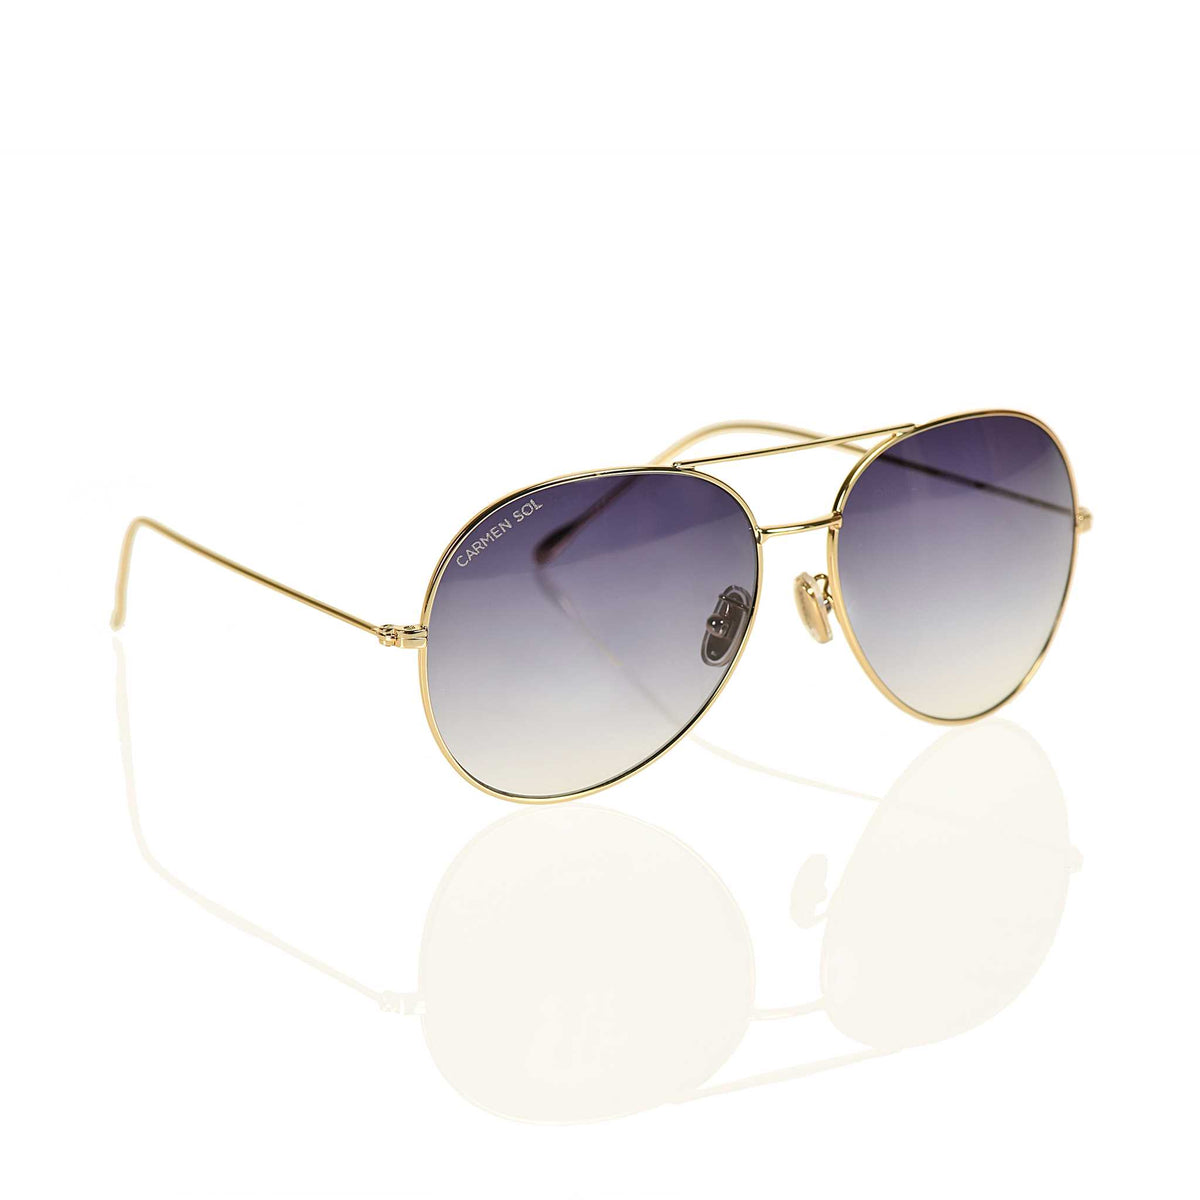 Gold Aviator sunglasses